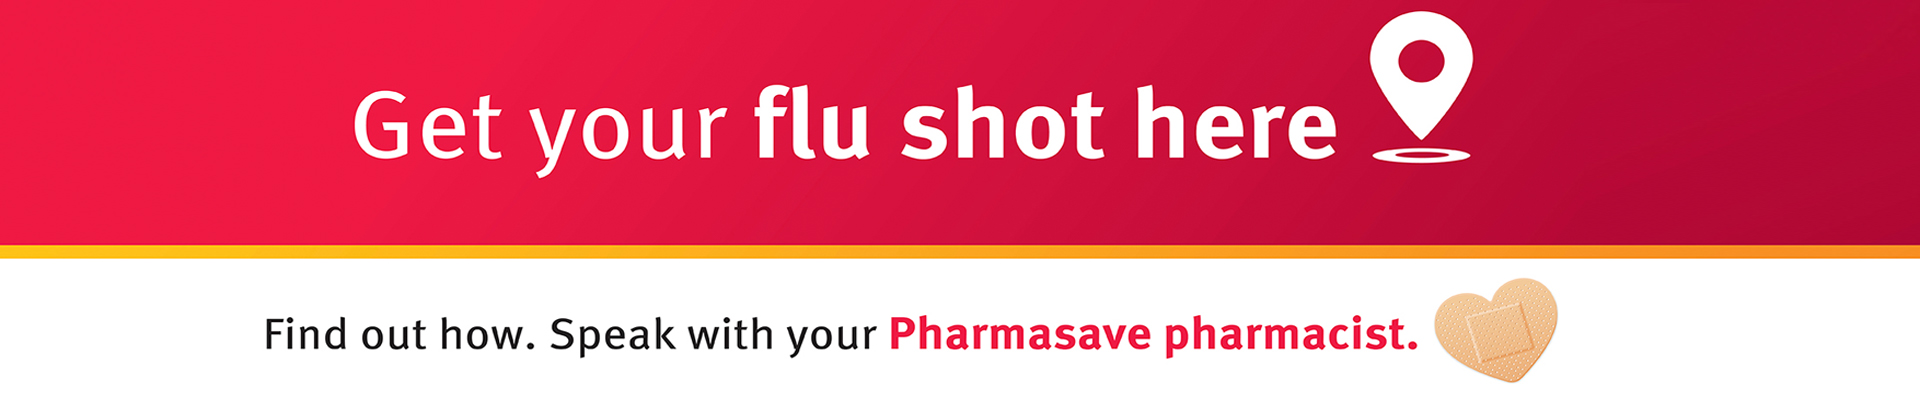 Get your flu shot here.